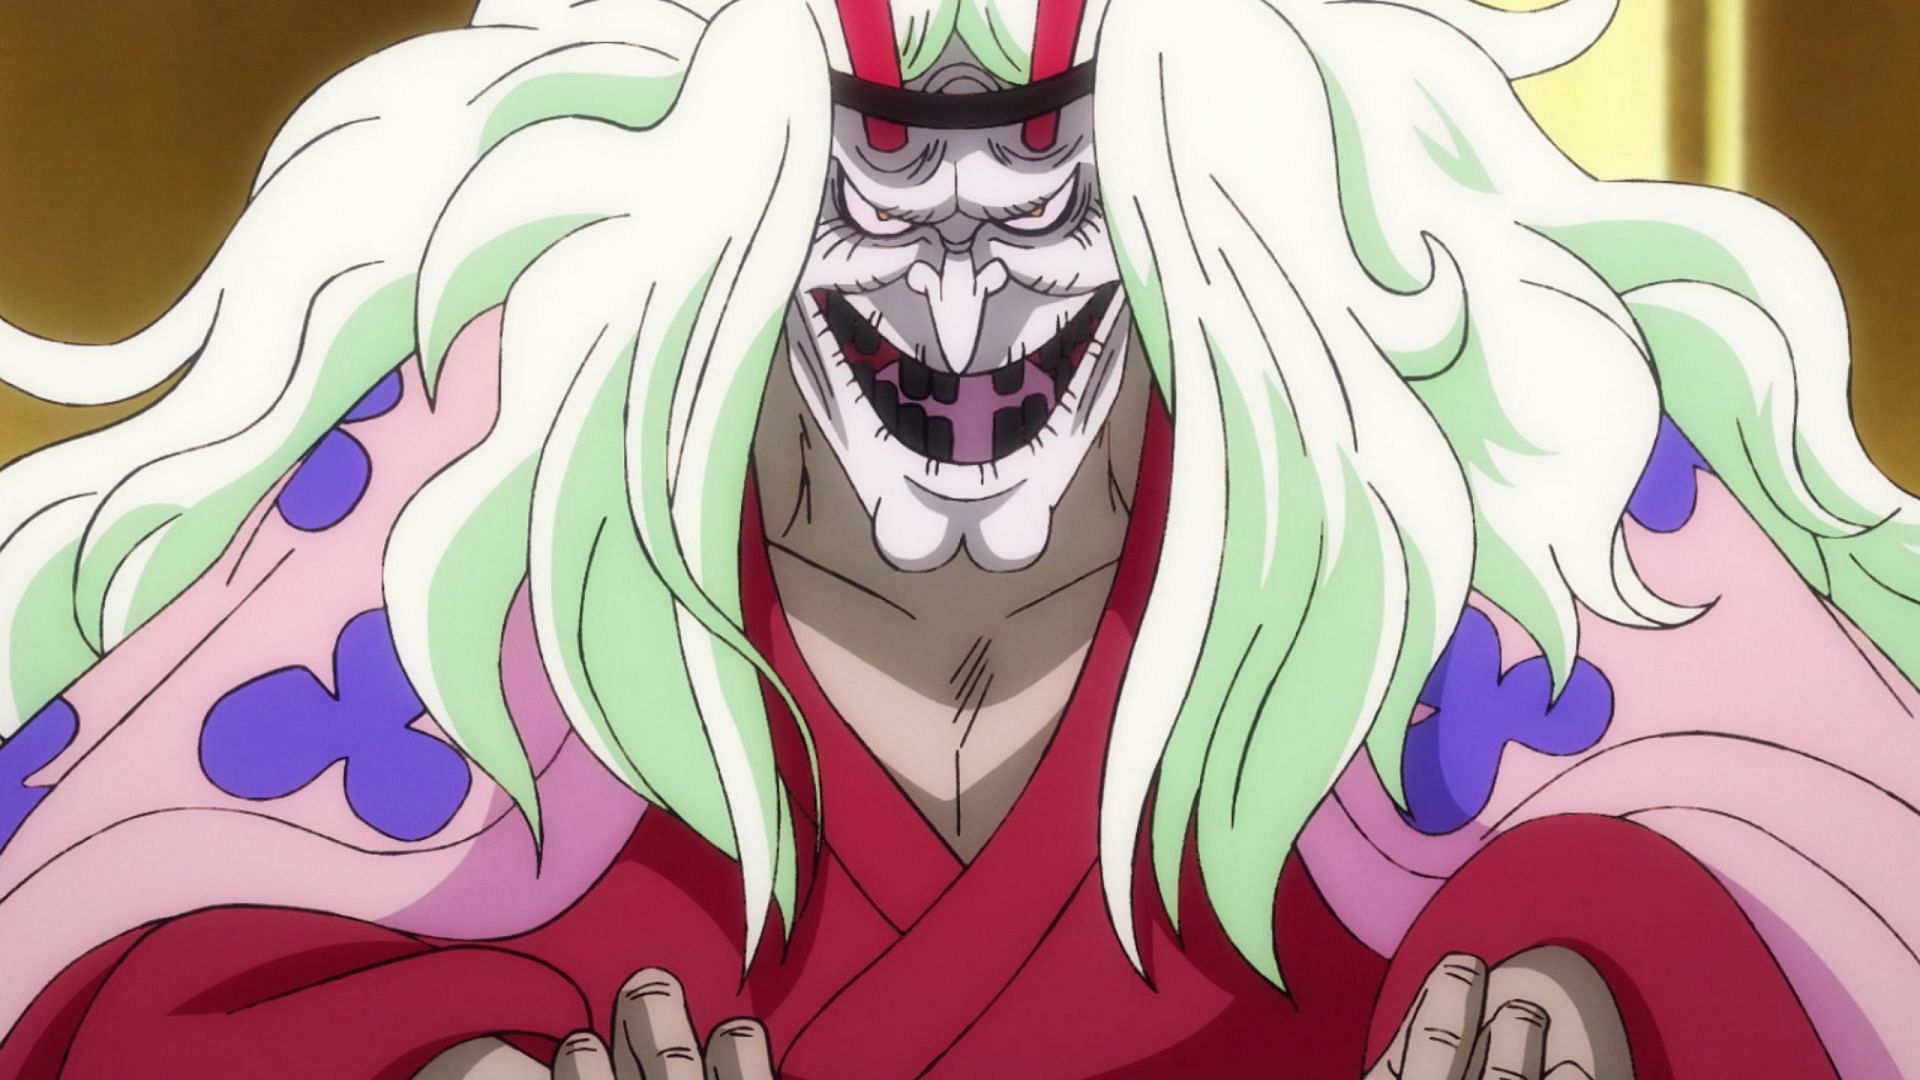 Kurozumi Higurashi as seen in the One Piece anime (Image via Toei Animation)